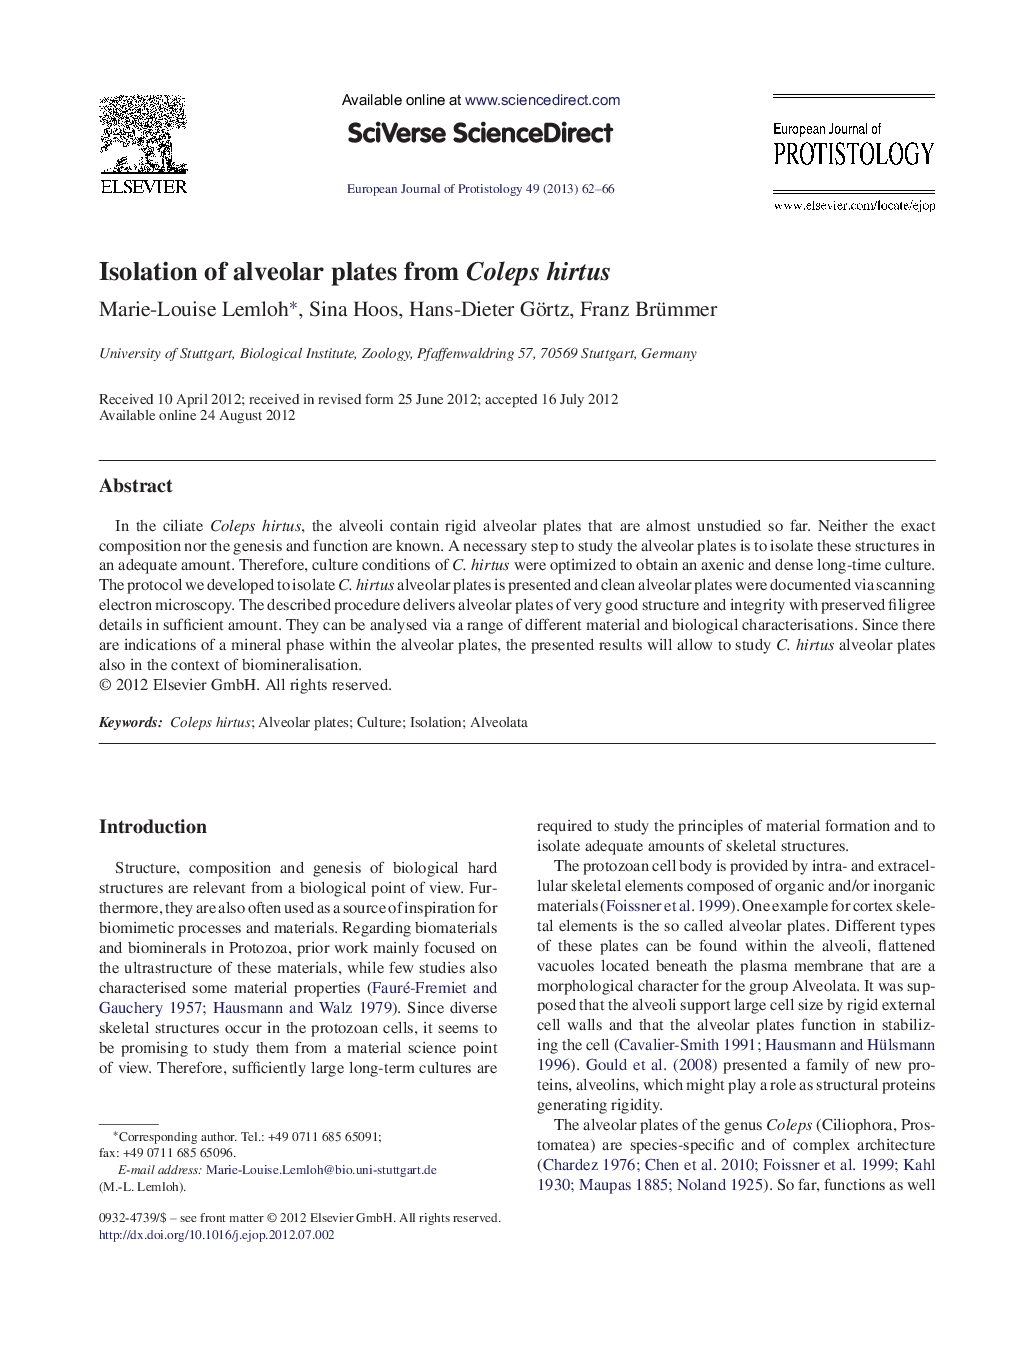 Isolation of alveolar plates from Coleps hirtus